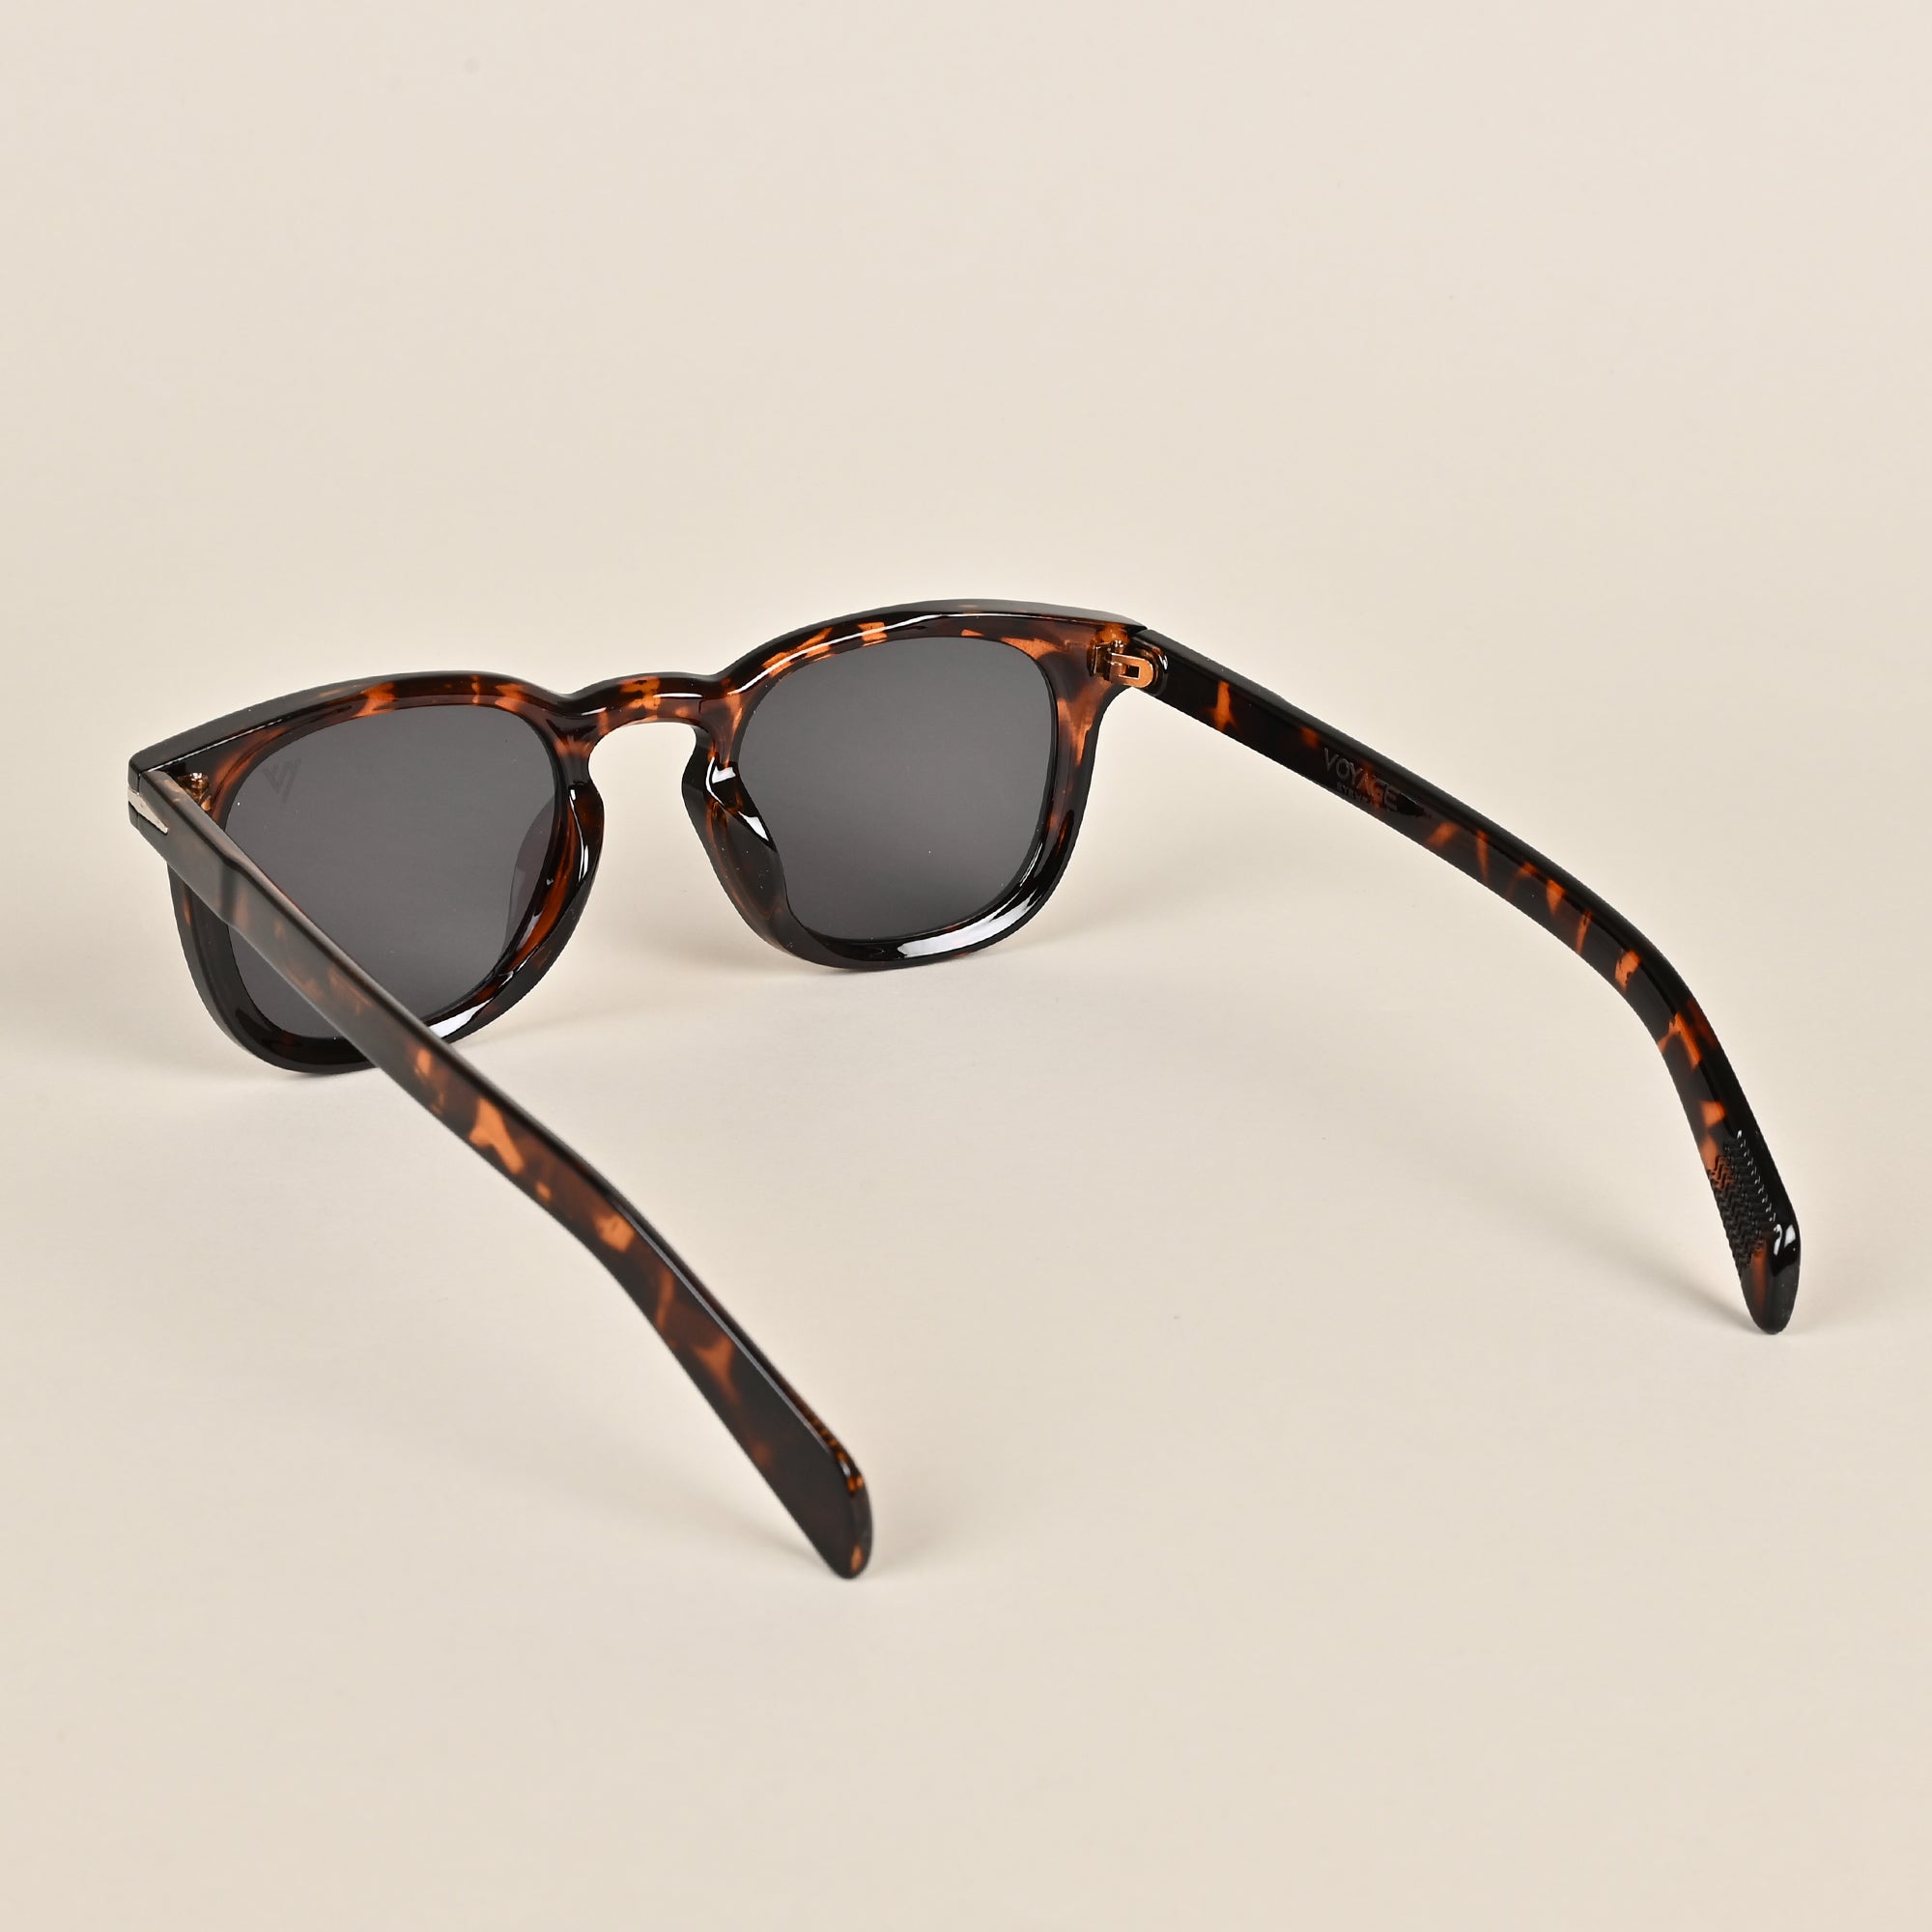 Voyage Black Square Sunglasses (2203MG3916)